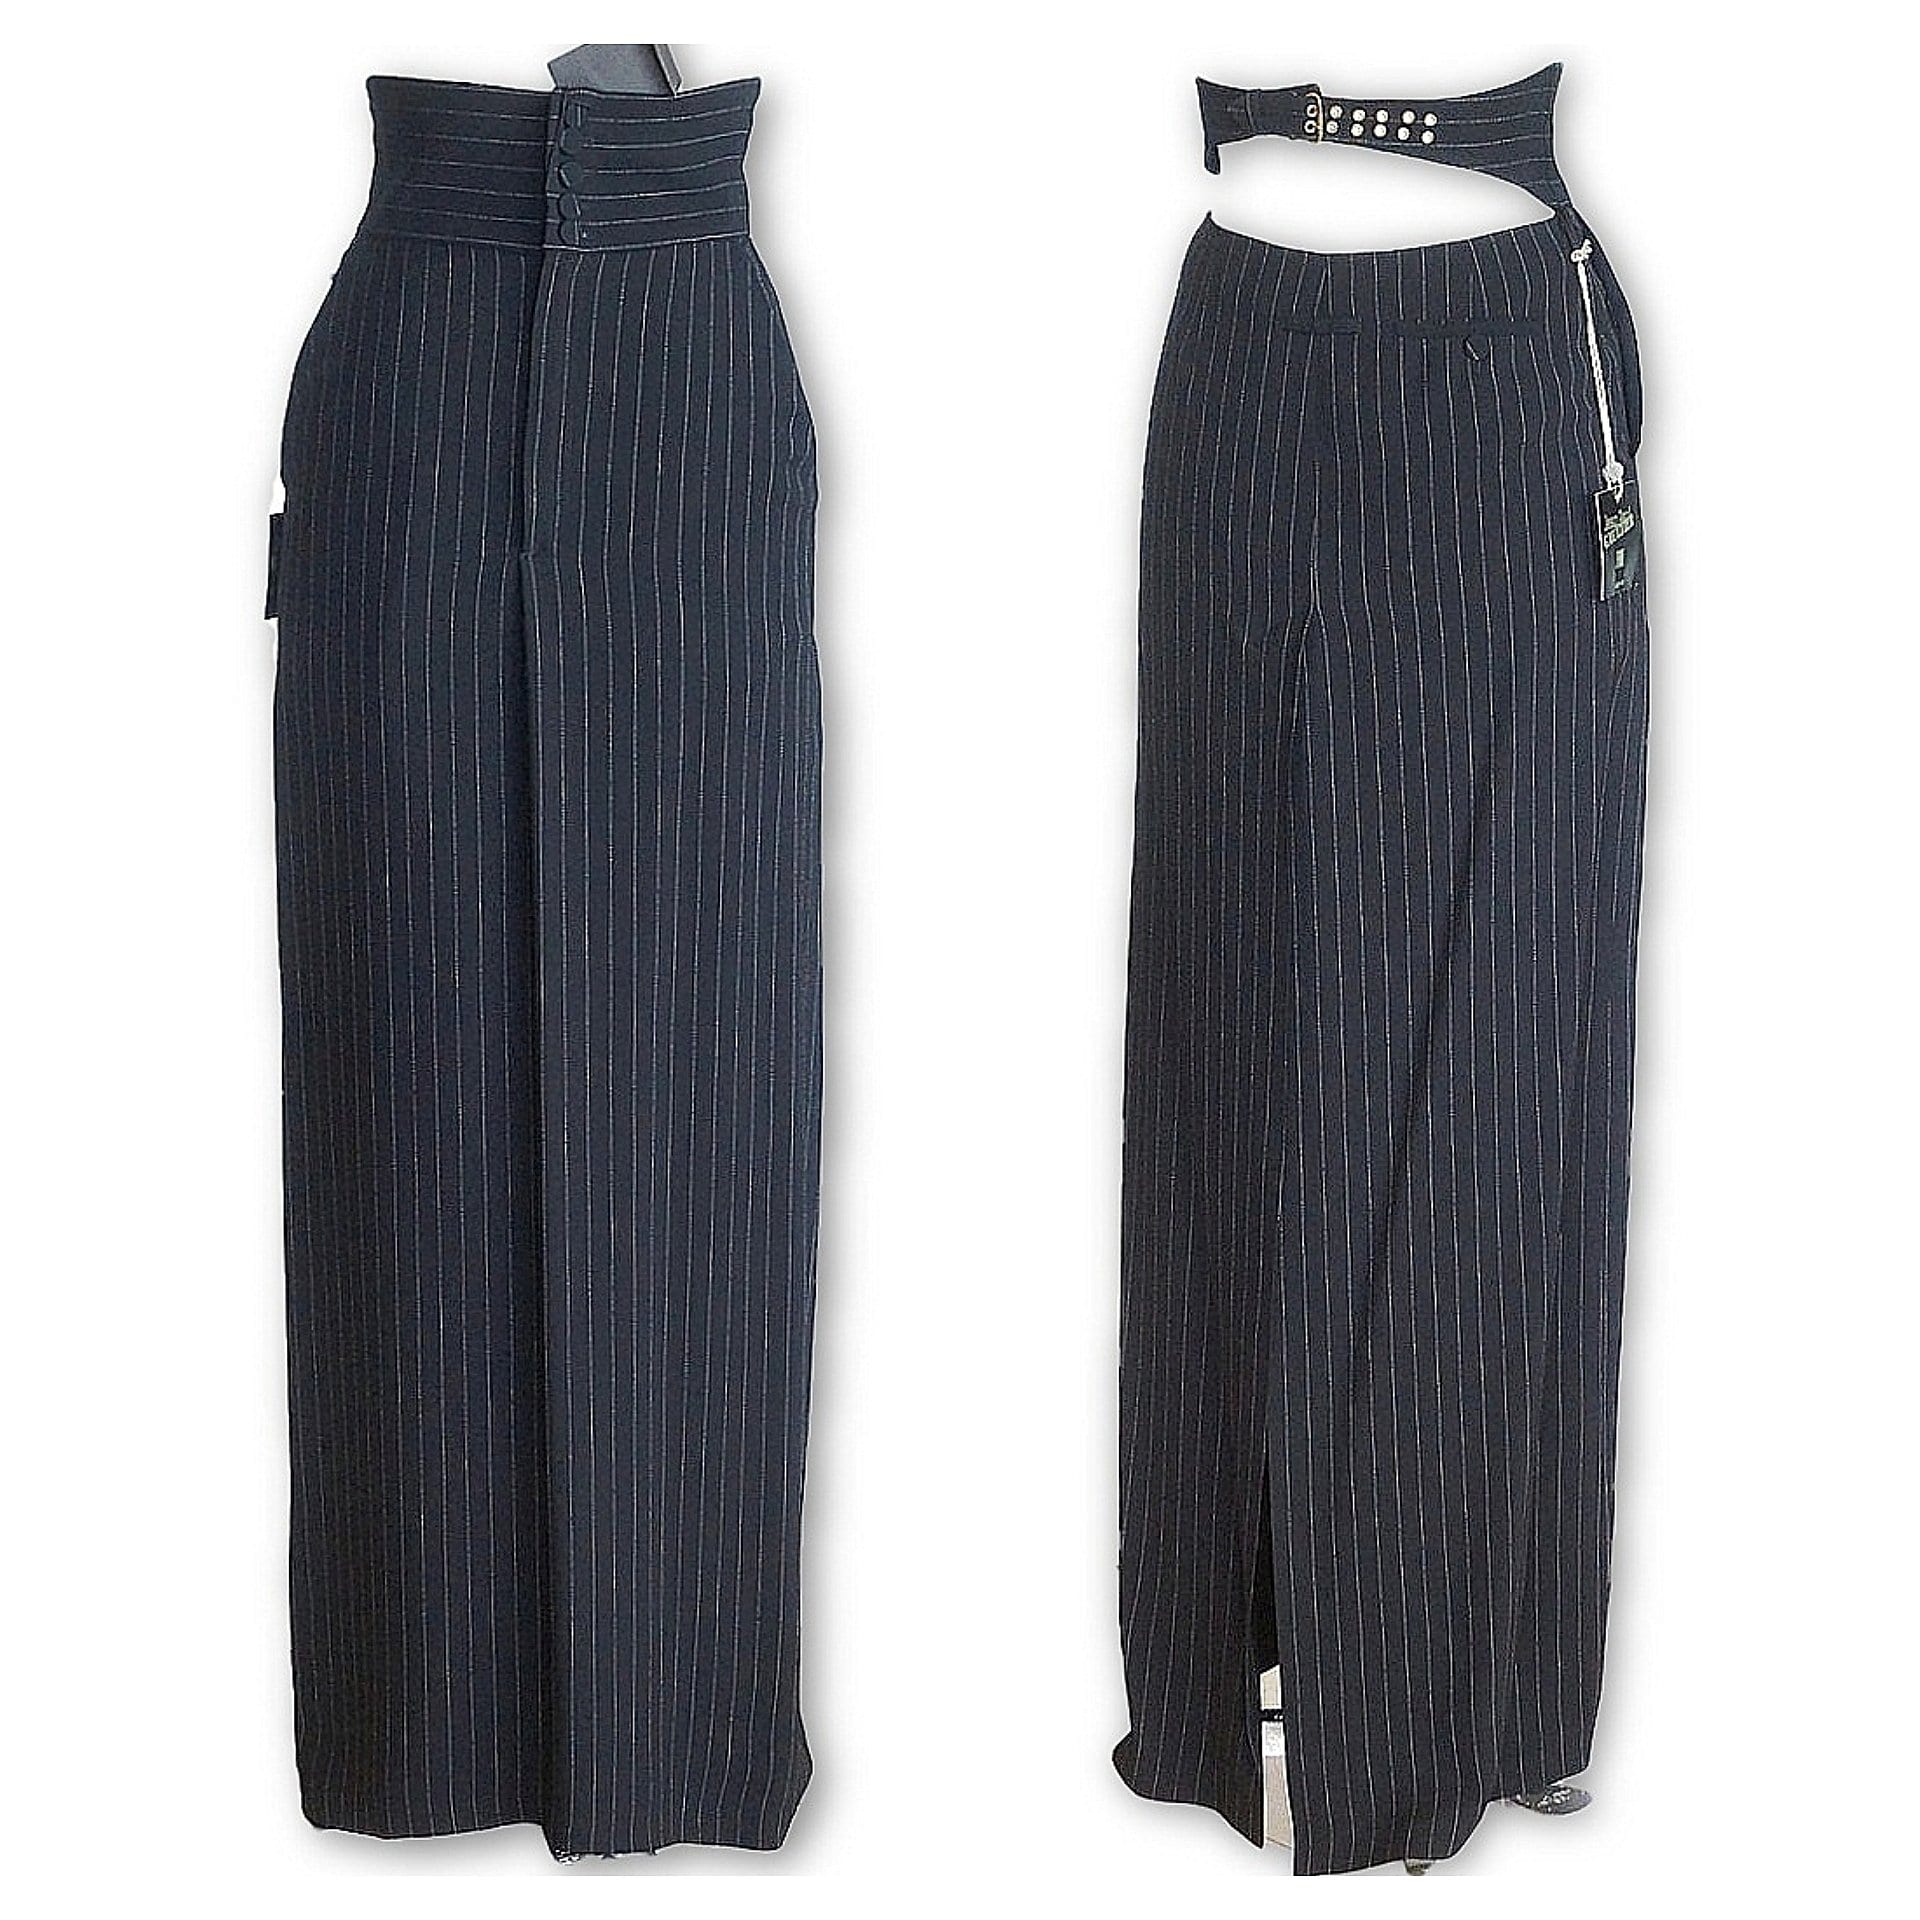 Jean Paul Gaultier Skirt Vintage Menswear Inspired Pinstripe Smashing  40 / 6 - mightychic